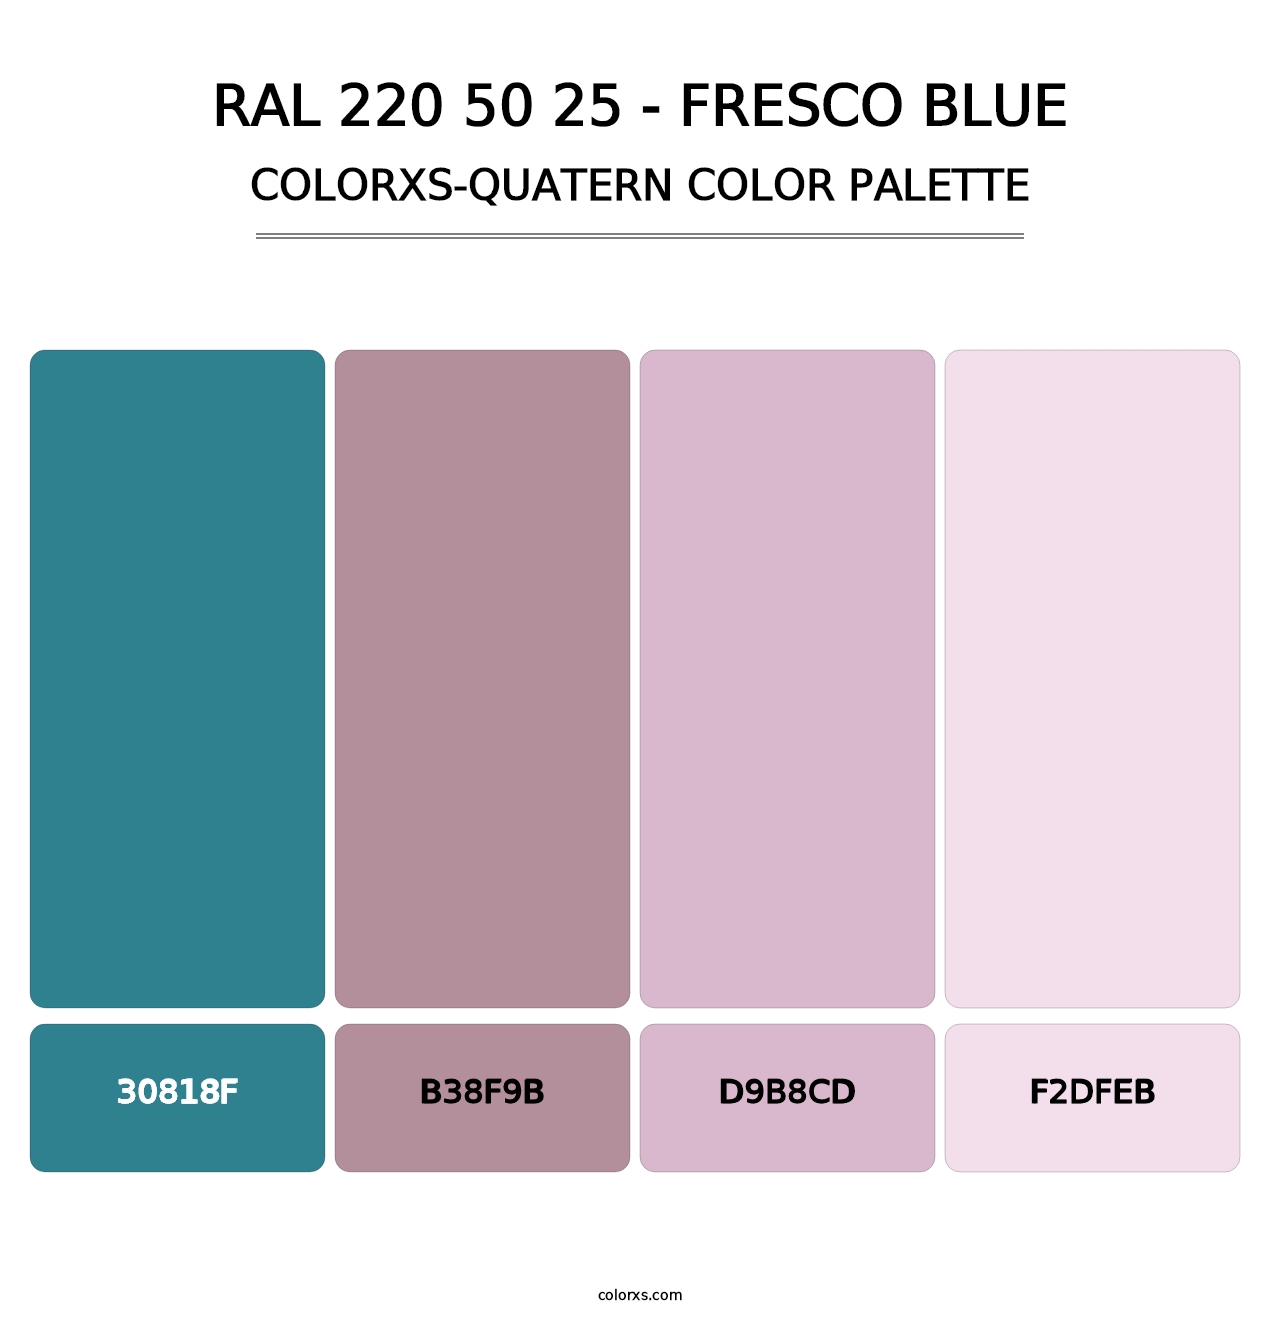 RAL 220 50 25 - Fresco Blue - Colorxs Quatern Palette